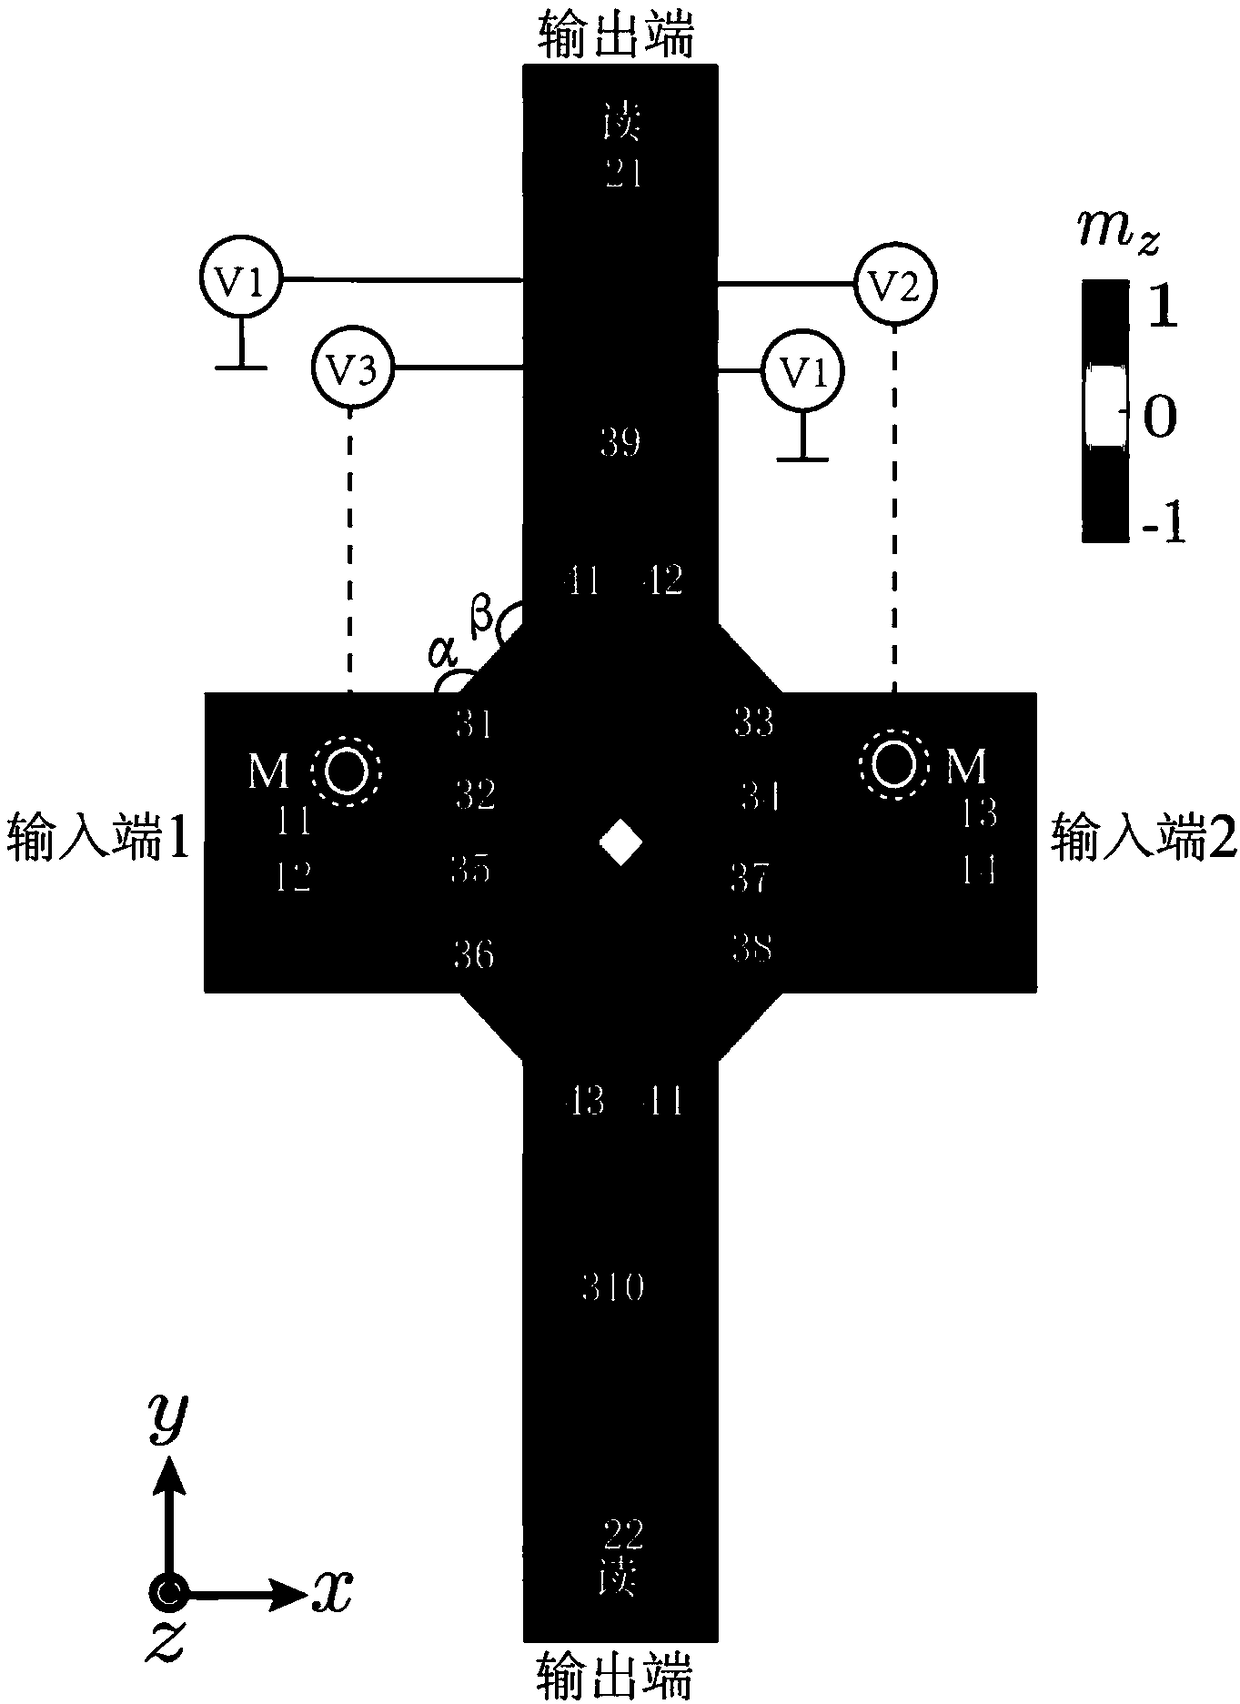 Magnetic skyrmion-based logic gate